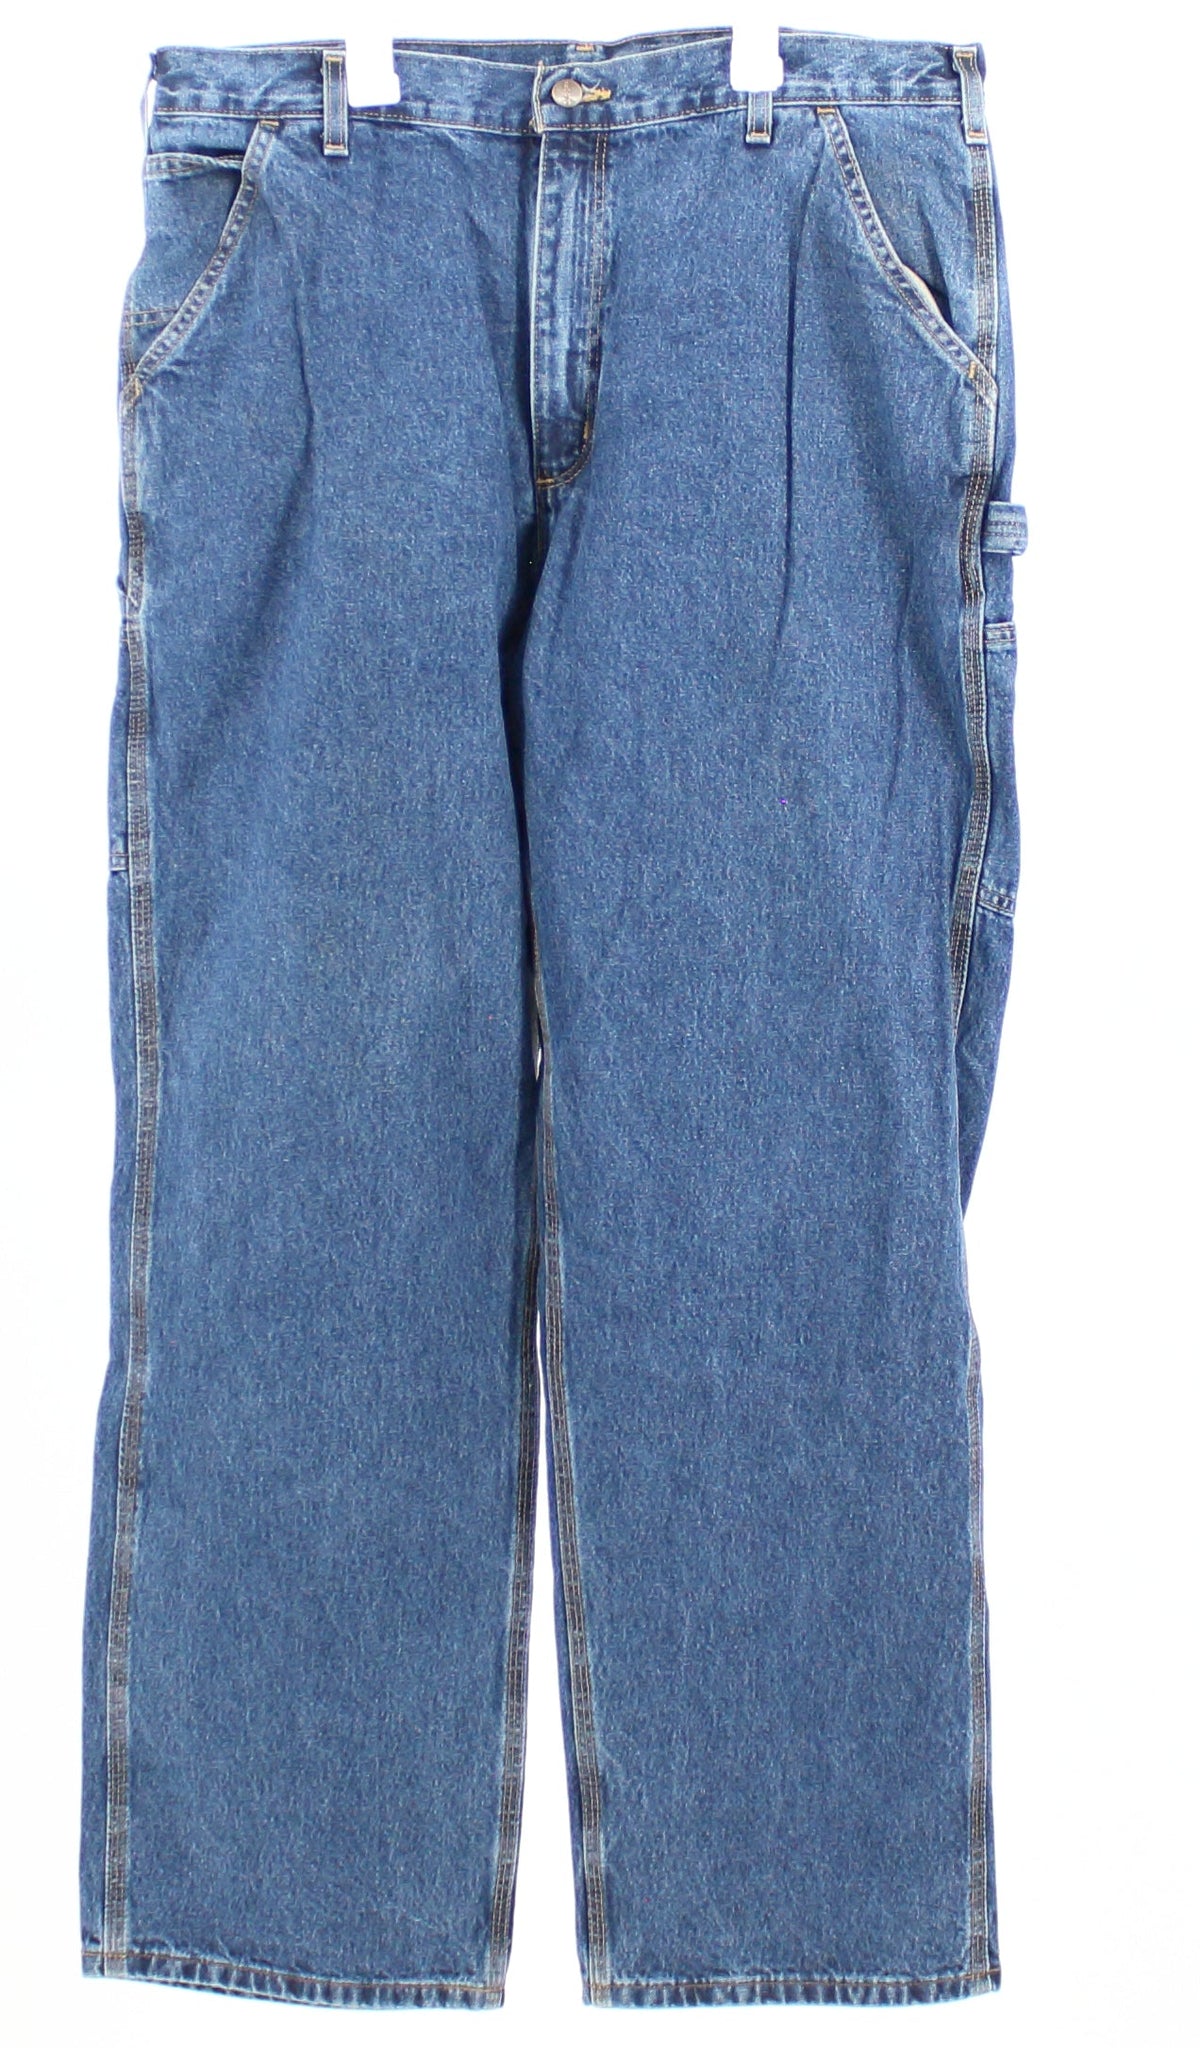 Carhartt Orginal Dungaree Fit Medium to Dark Washed Jeans